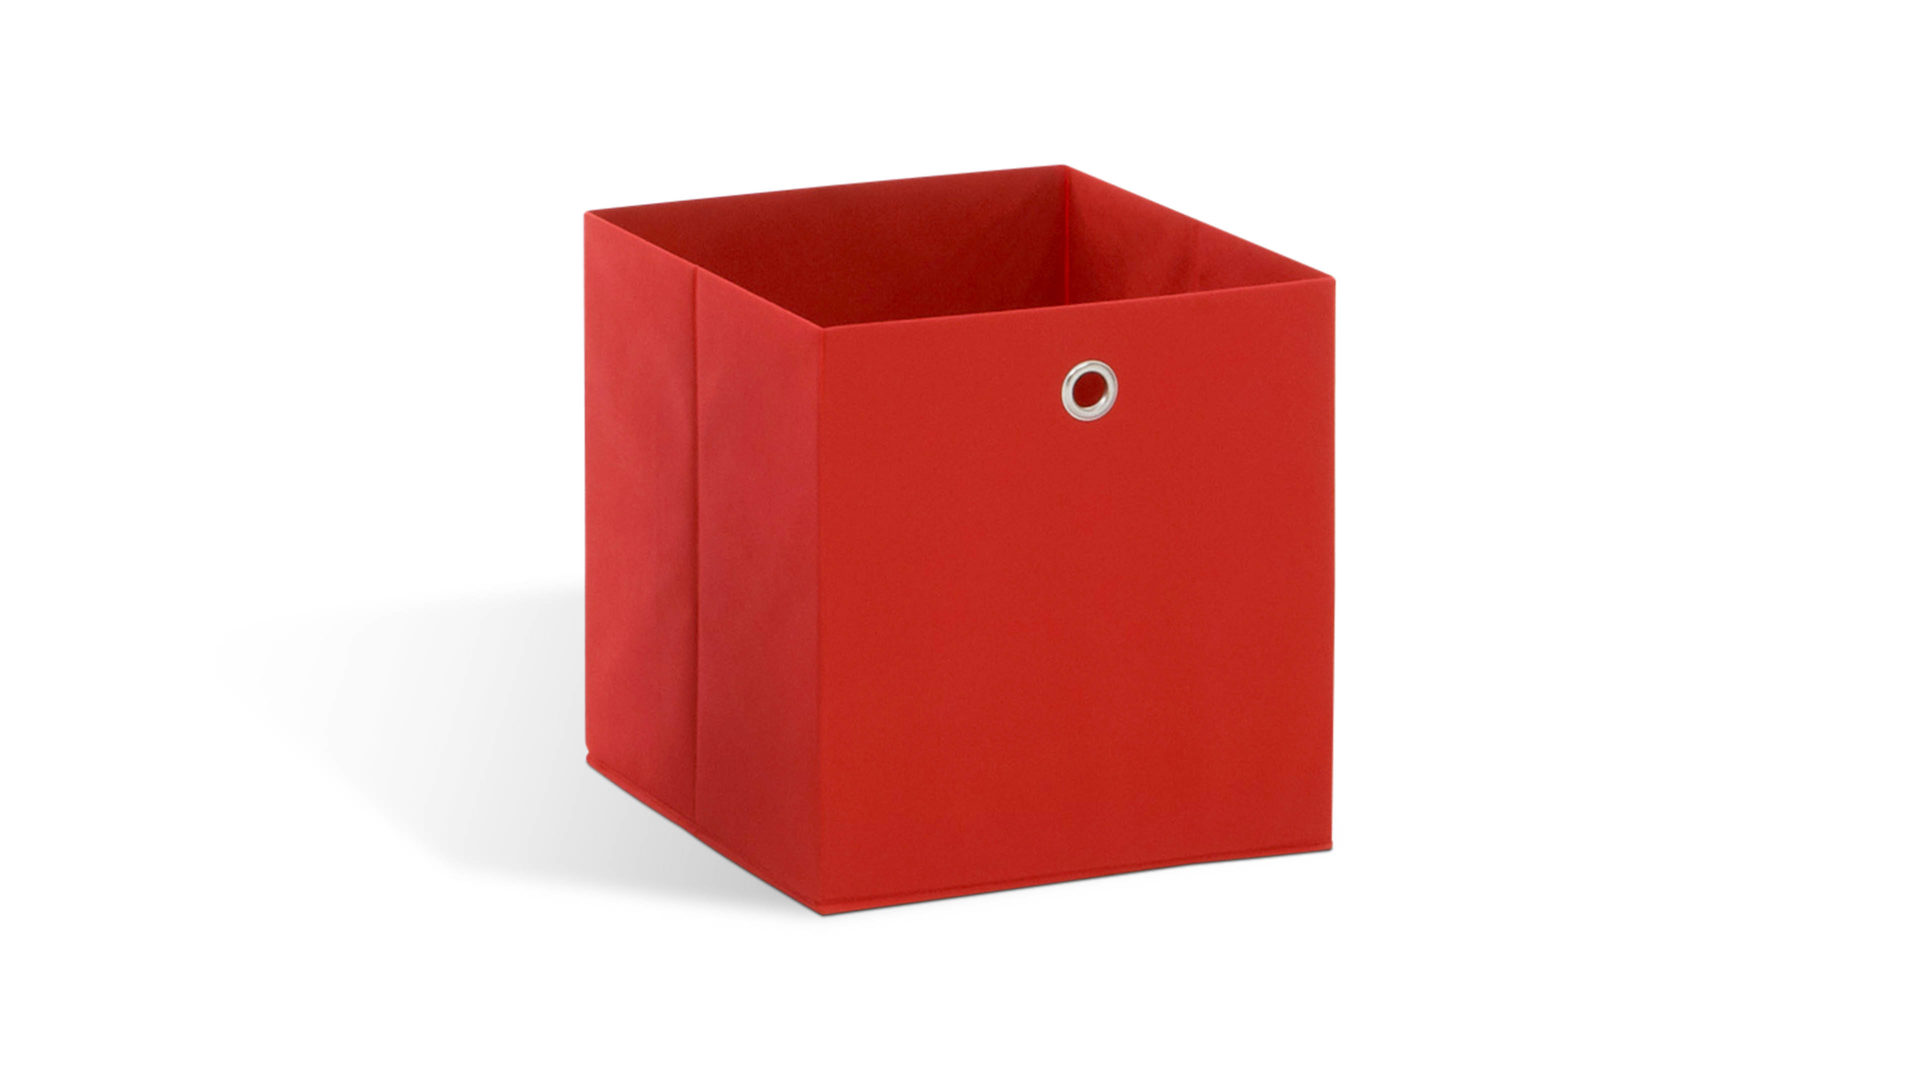 Faltbox Fmd furniture aus Stoff in Rot Faltbox hellrotes, verstärktes Vlies - ca. 32 x 32 cm